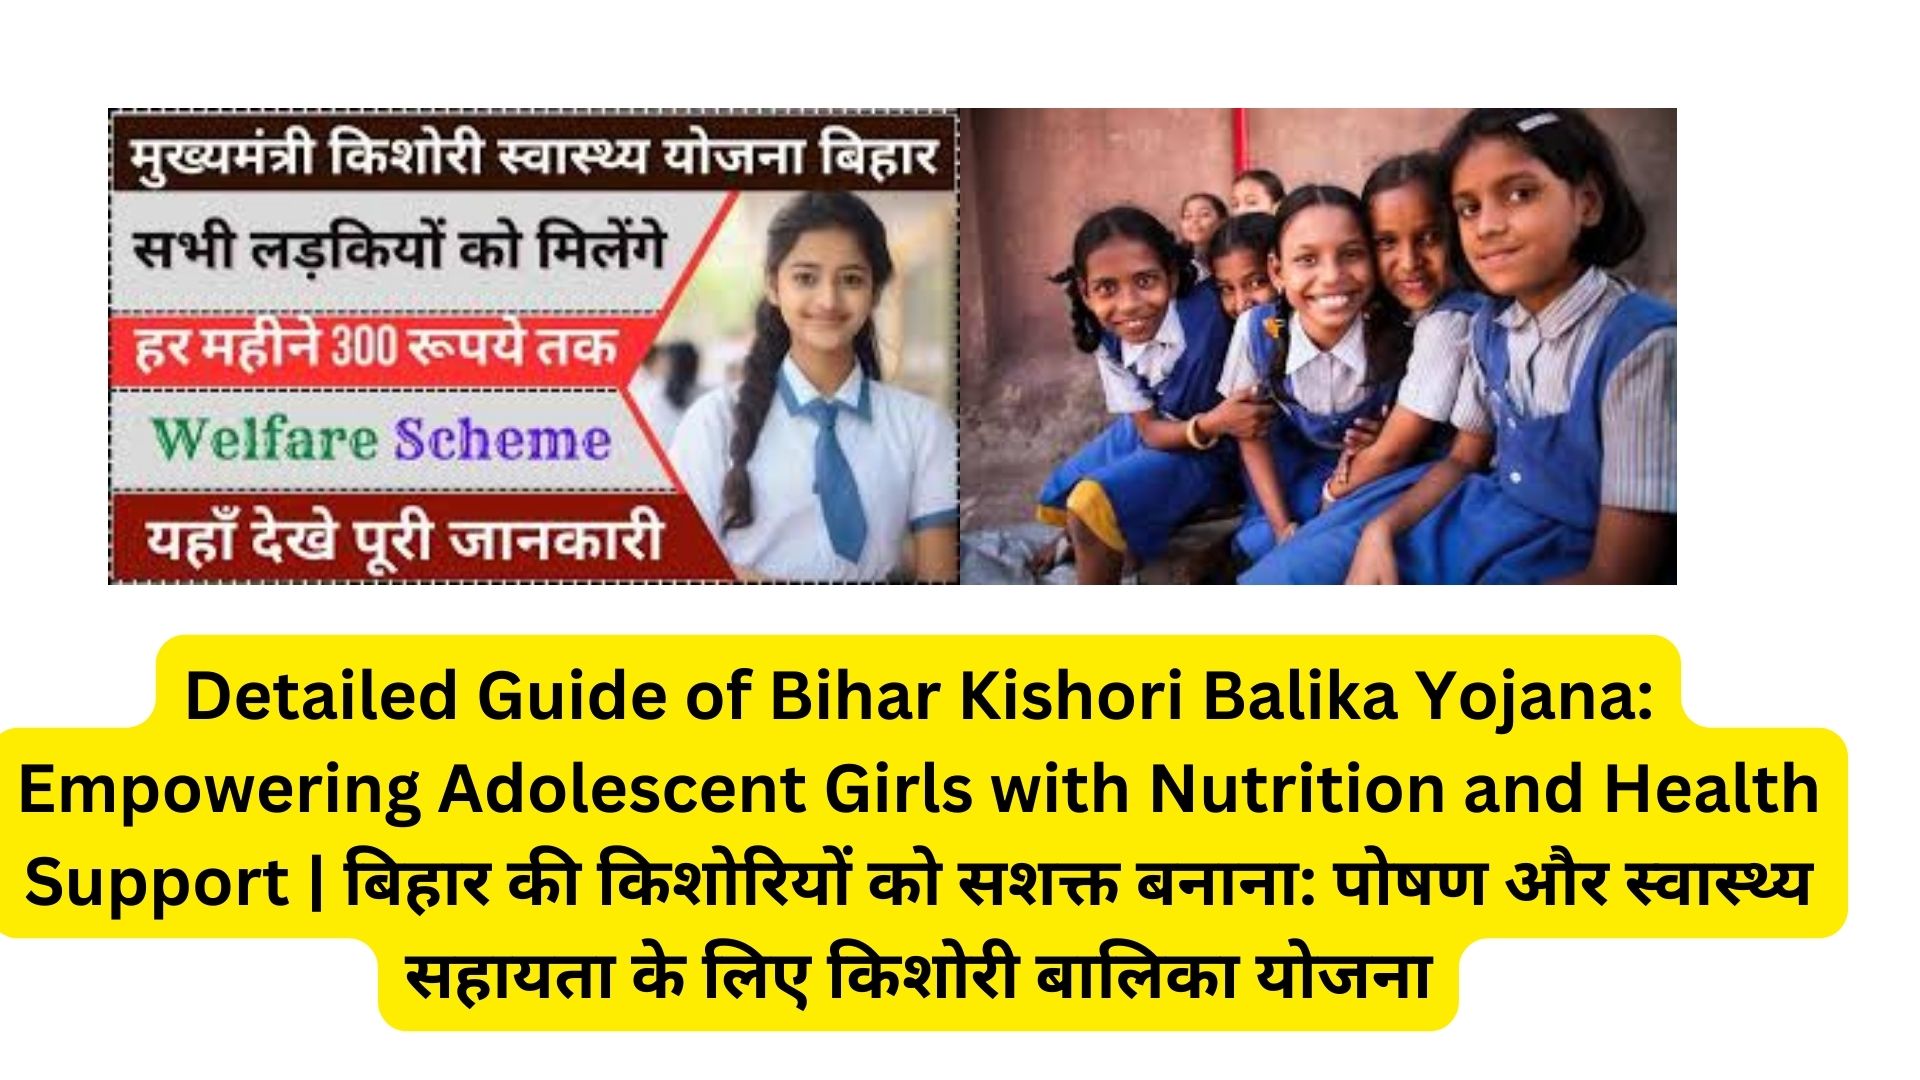 Detailed Guide of Bihar Kishori Balika Yojana: Empowering Adolescent Girls with Nutrition and Health Support | बिहार की किशोरियों को सशक्त बनाना: पोषण और स्वास्थ्य सहायता के लिए किशोरी बालिका योजना